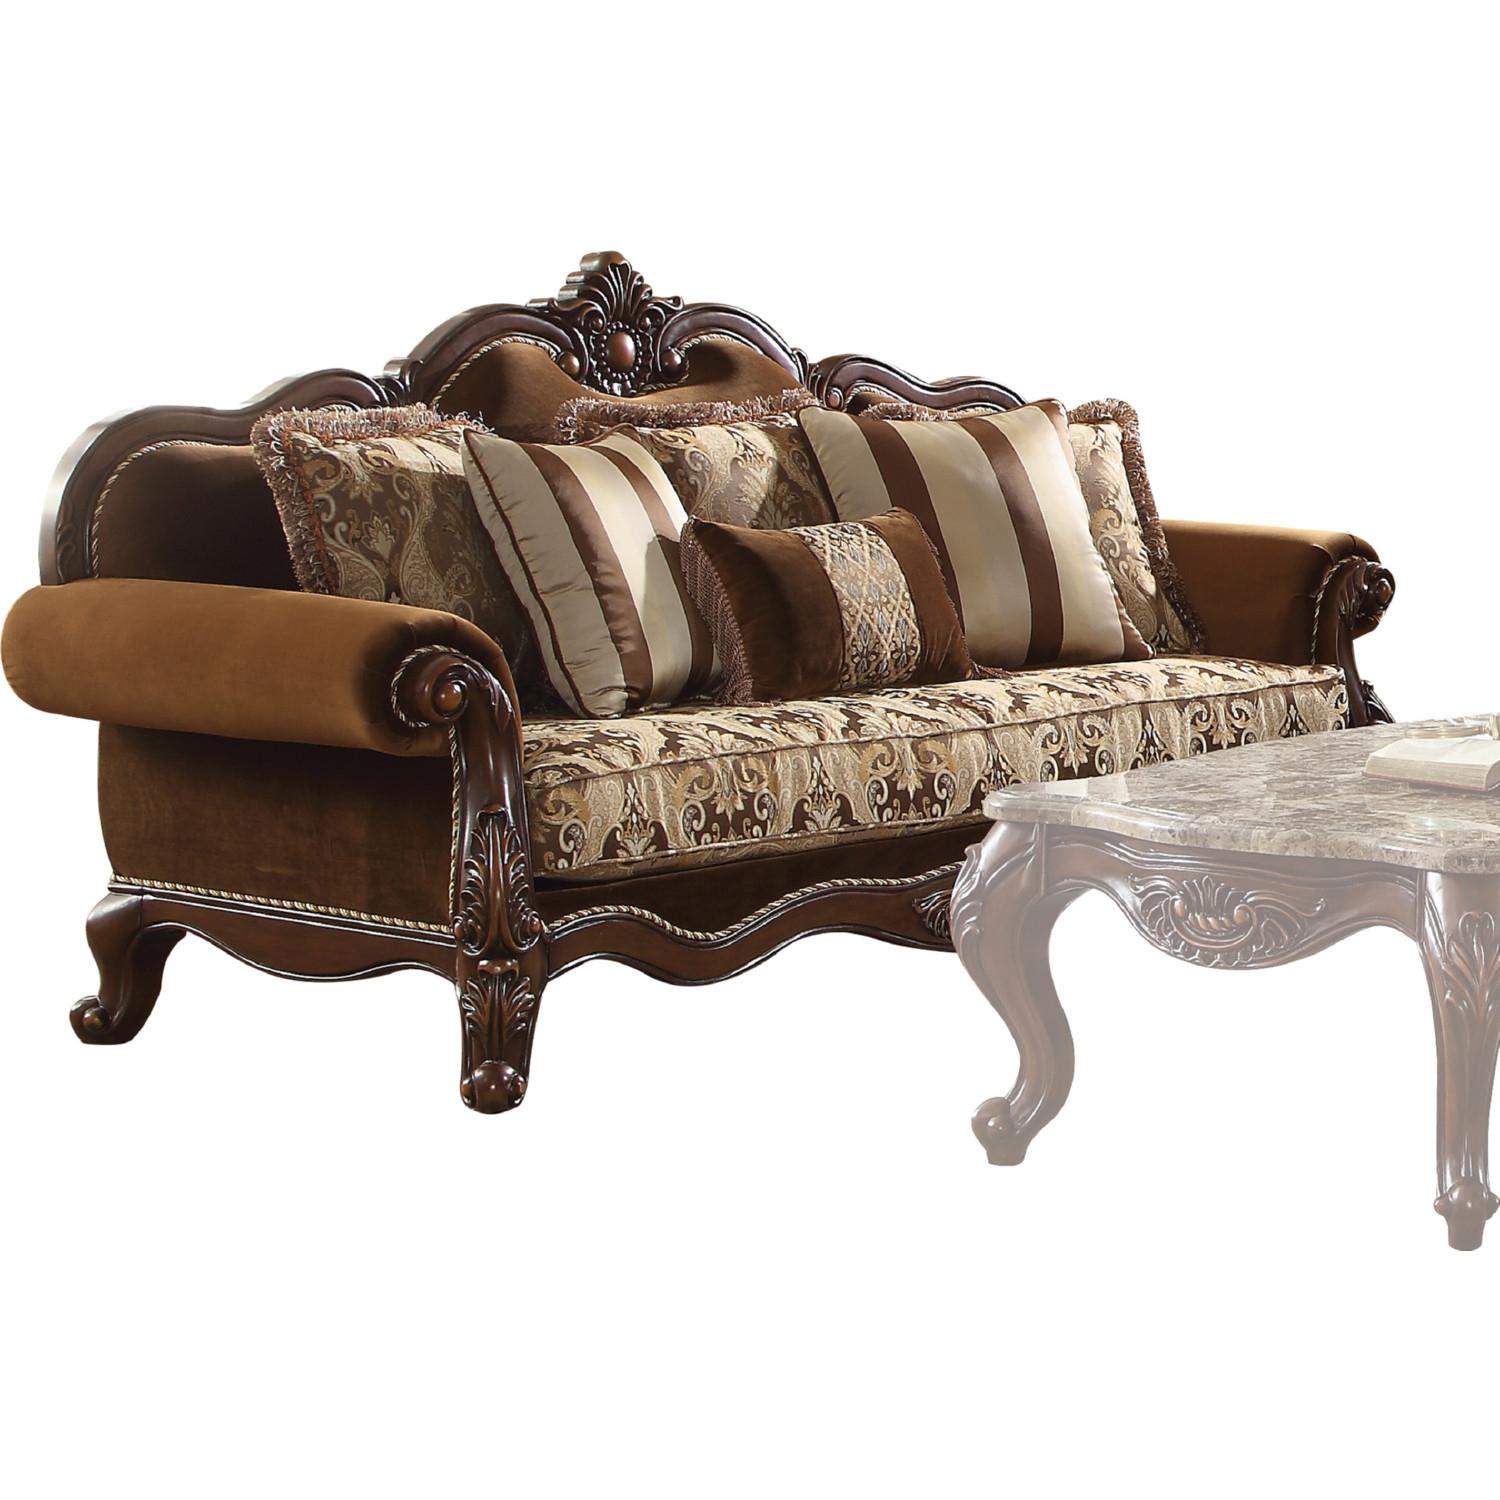 Classic, Traditional Sofa Jardena 50655 50655-Jardena in Oak, Cherry, Brown Fabric